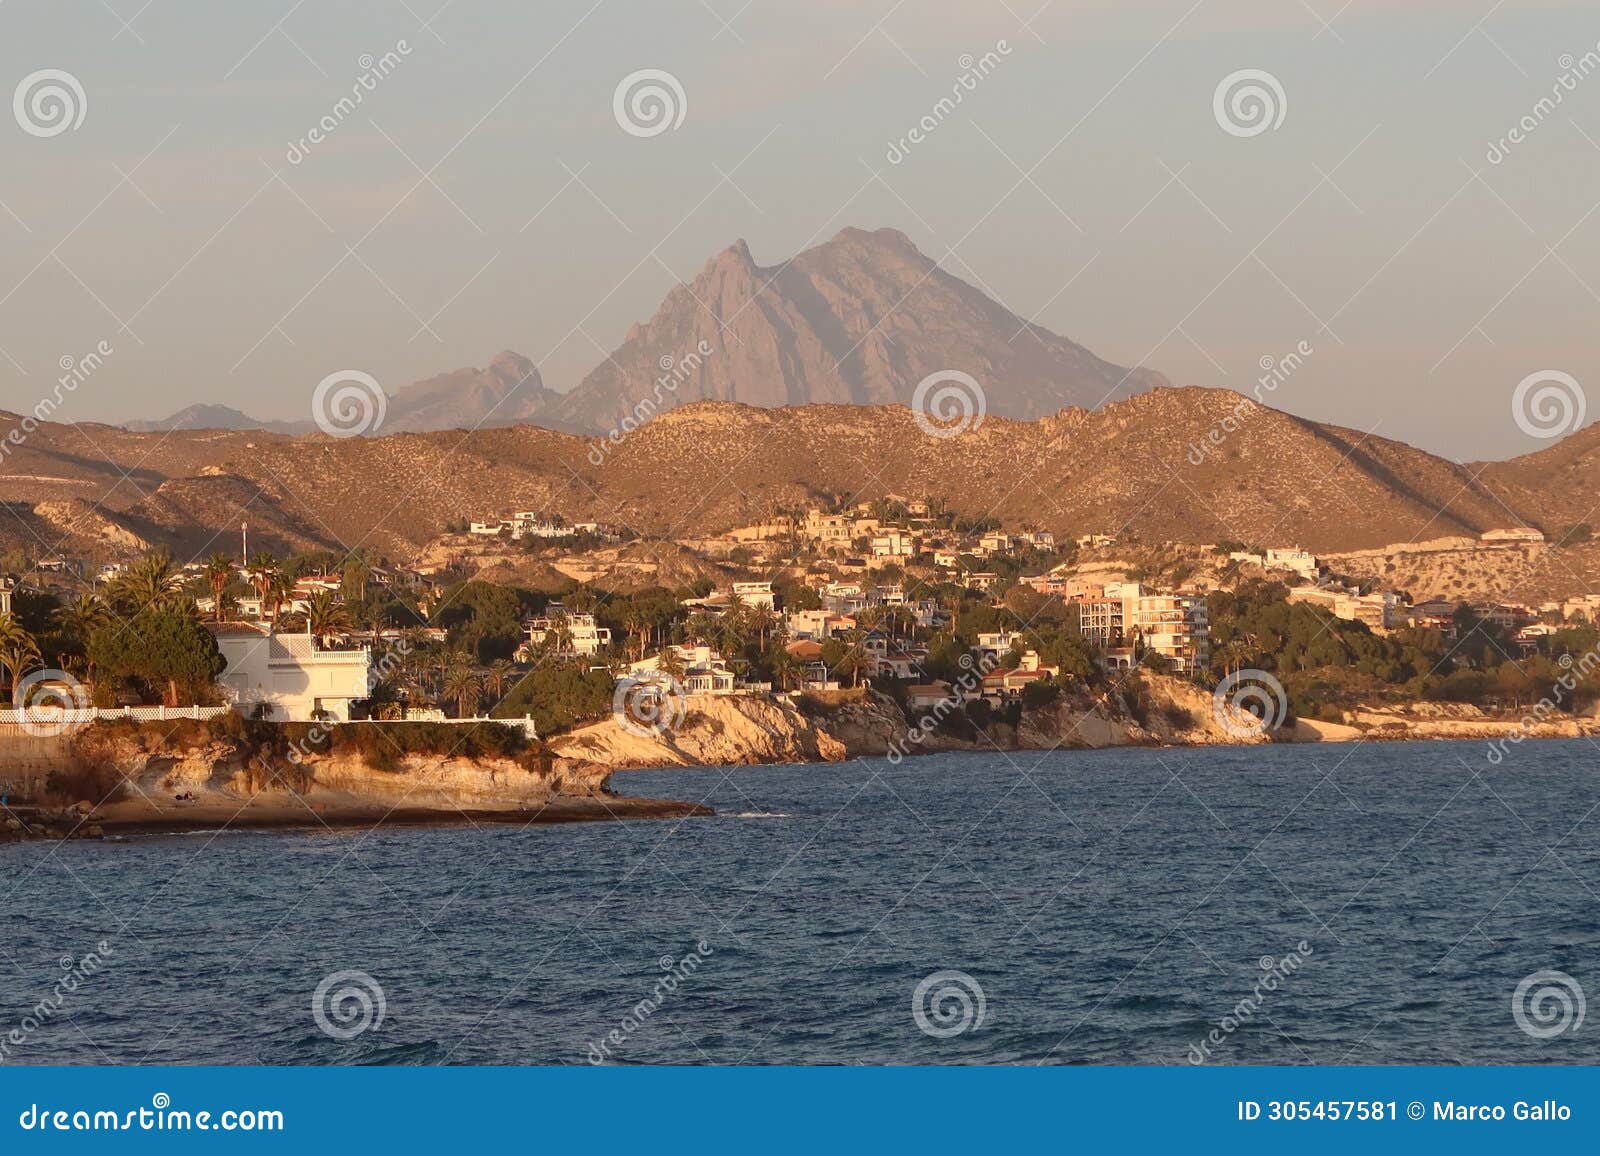 puig campana mountain seen from the mediterranean sea